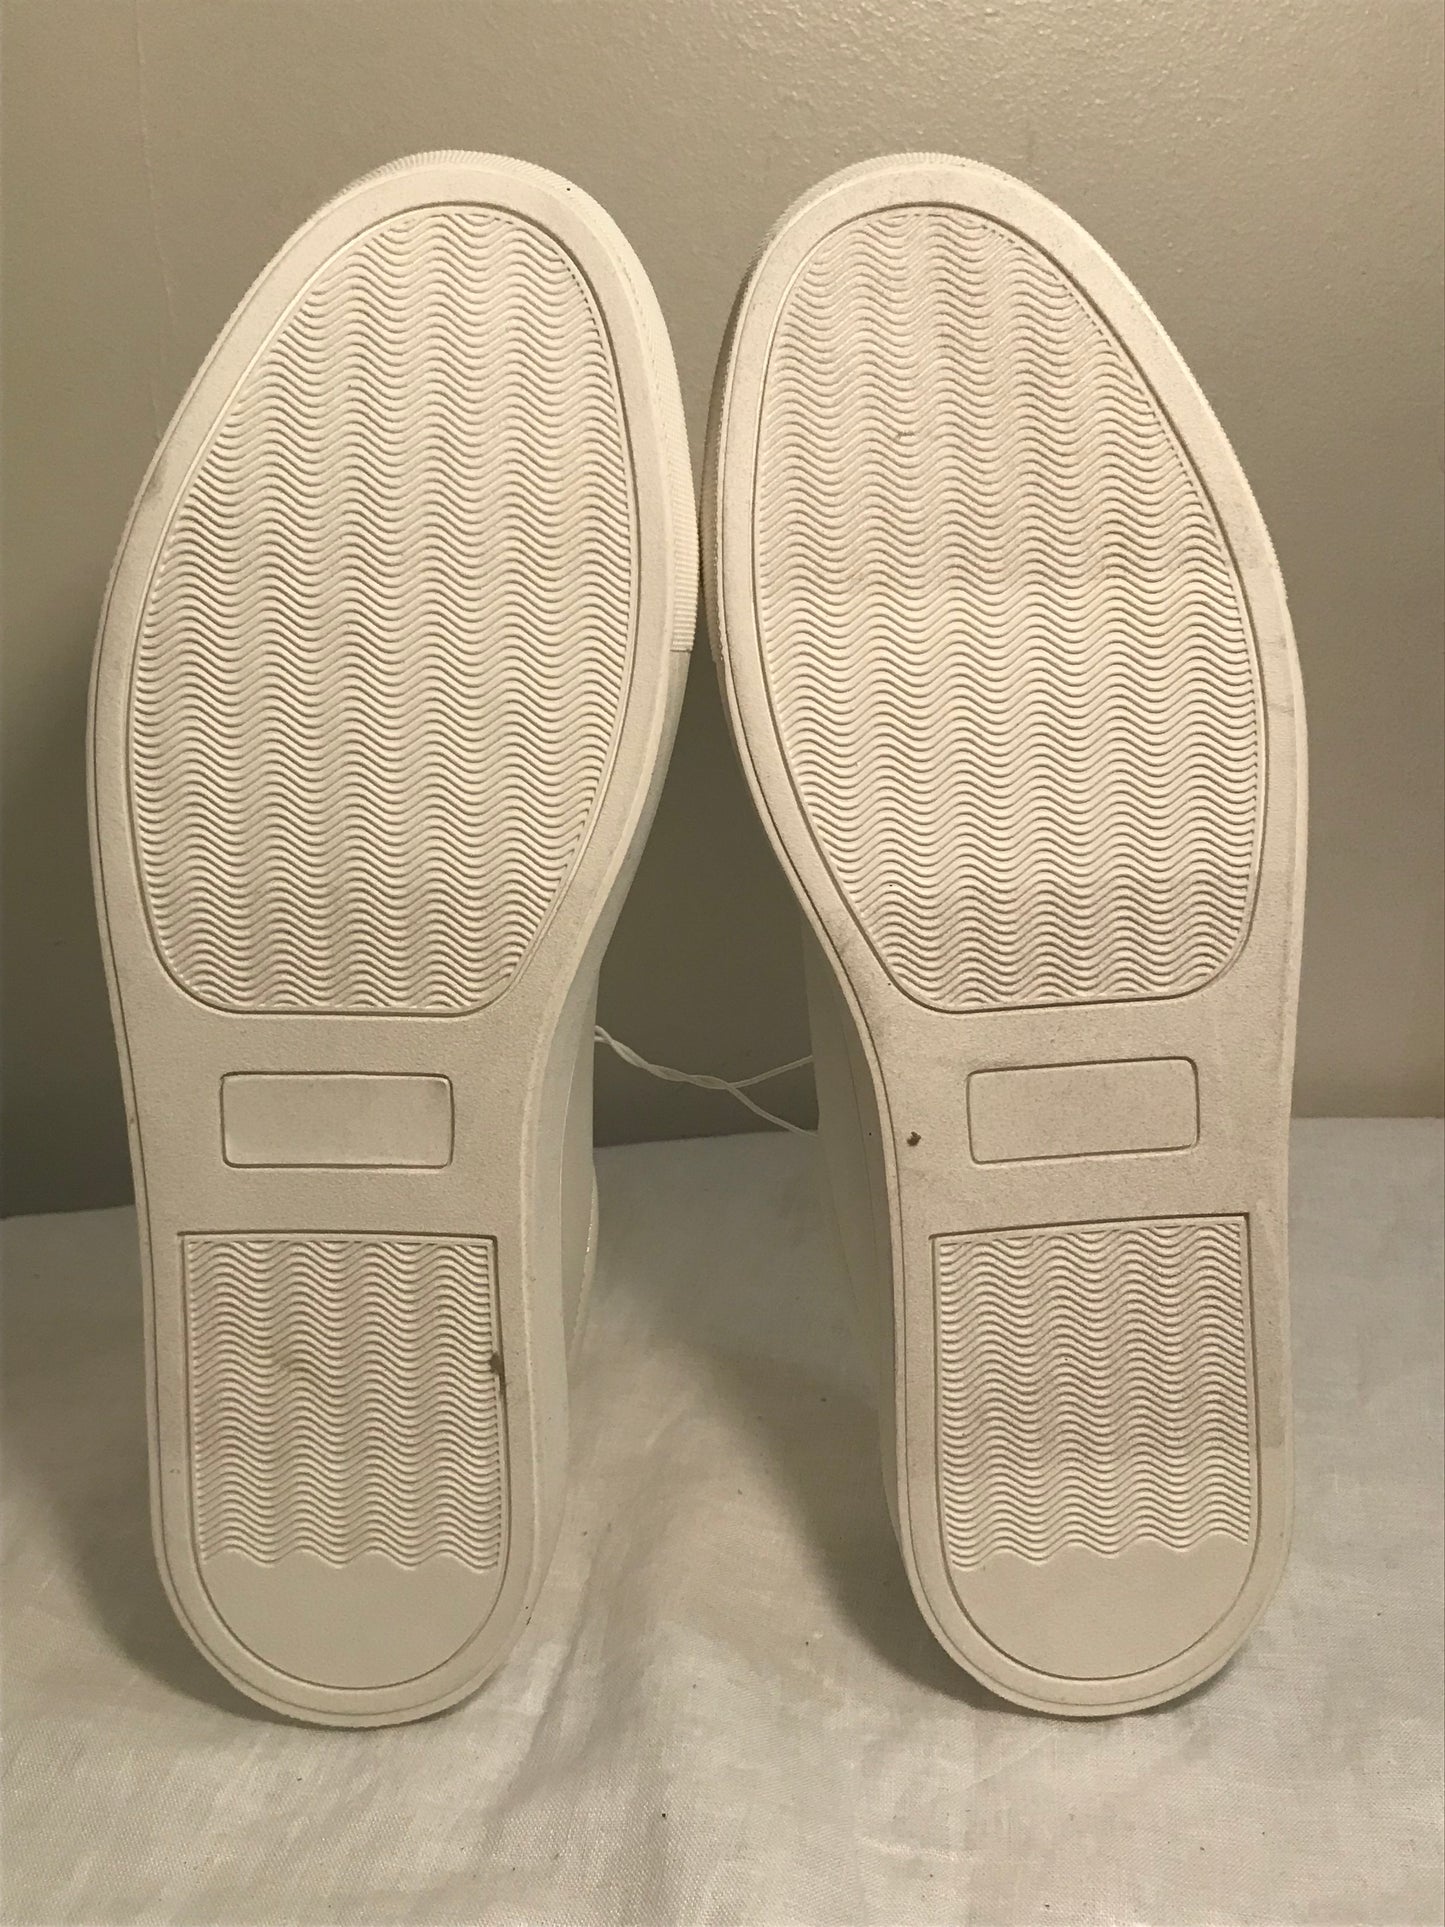 Men's White Tennis Shoes Size 13